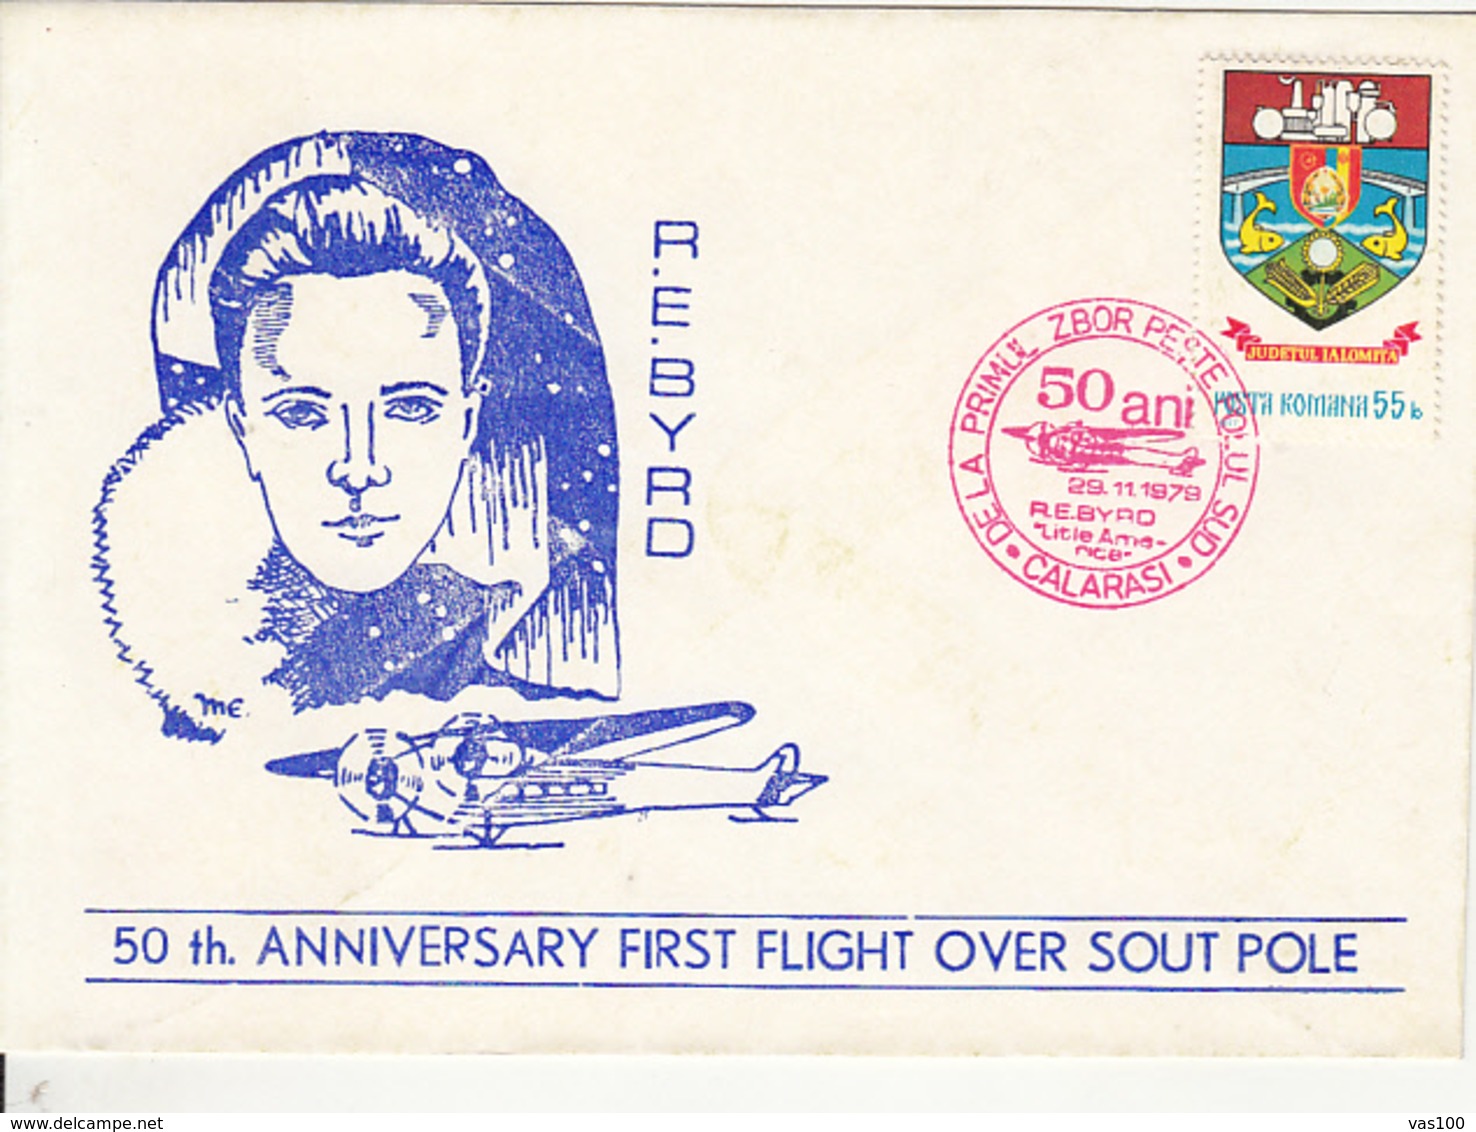 POLAR FLIGHTS, RICHARD E. BYRD FIRST FLIGHT OVER SOUTH POLE, PLANE, SPECIAL COVER, 1979, ROMANIA - Polare Flüge